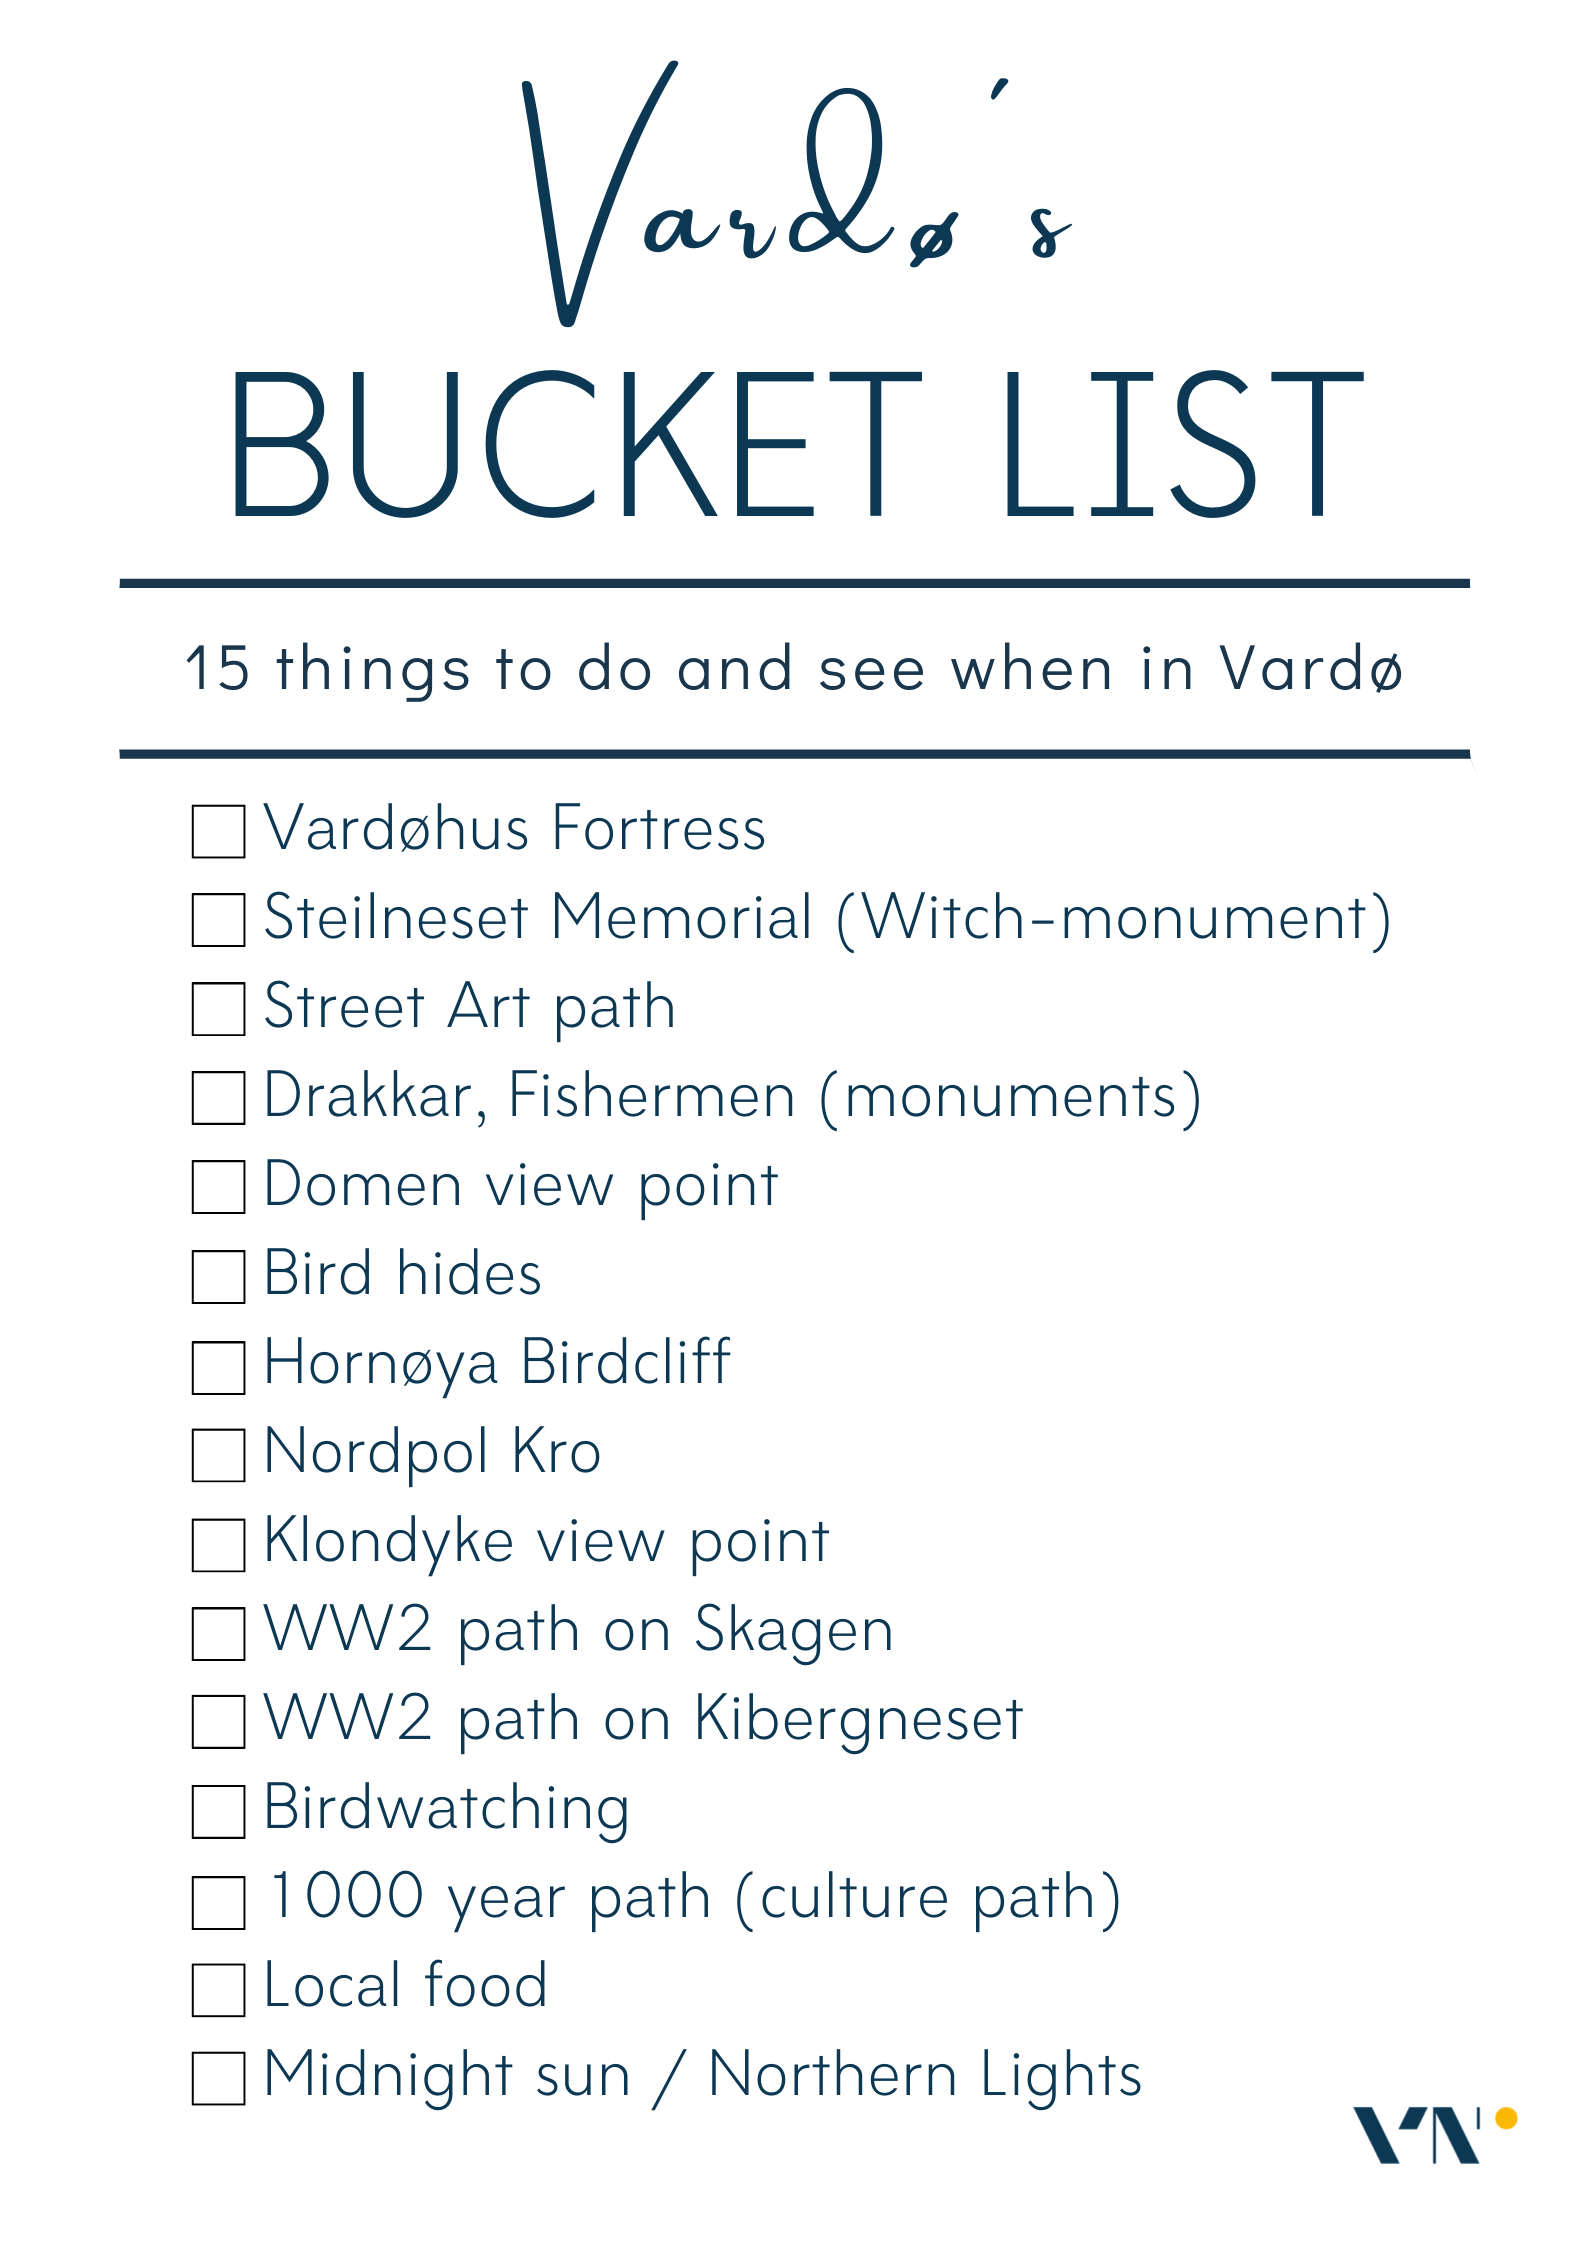 Bucket list.png